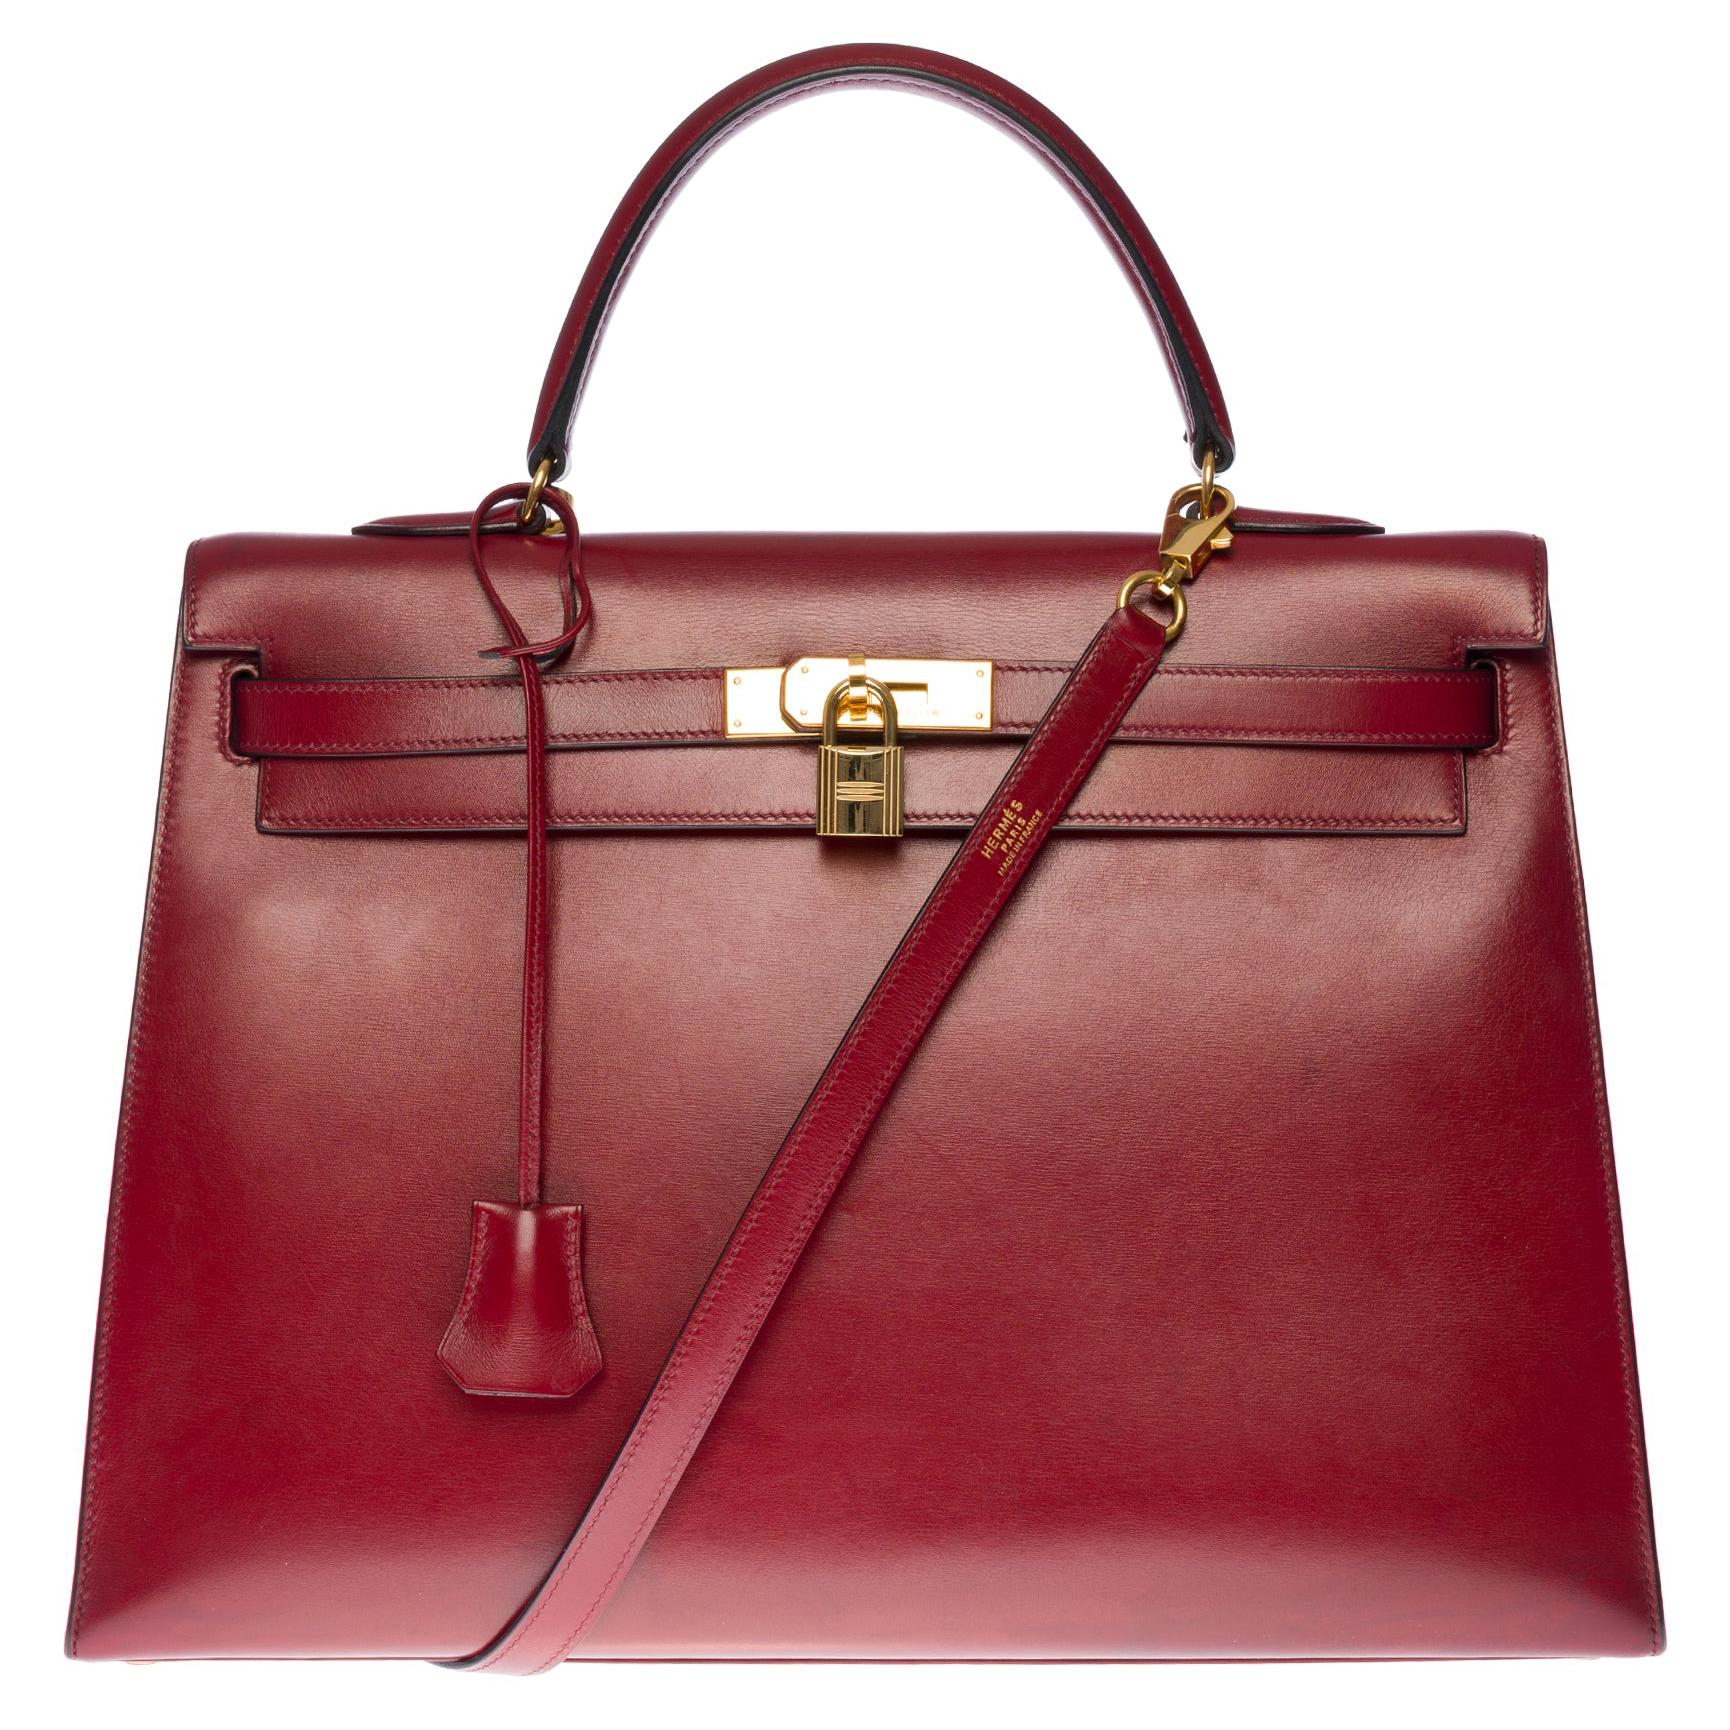 Hermès Kelly 35 sellier strap shoulder bag in burgundy calf leather, GHW